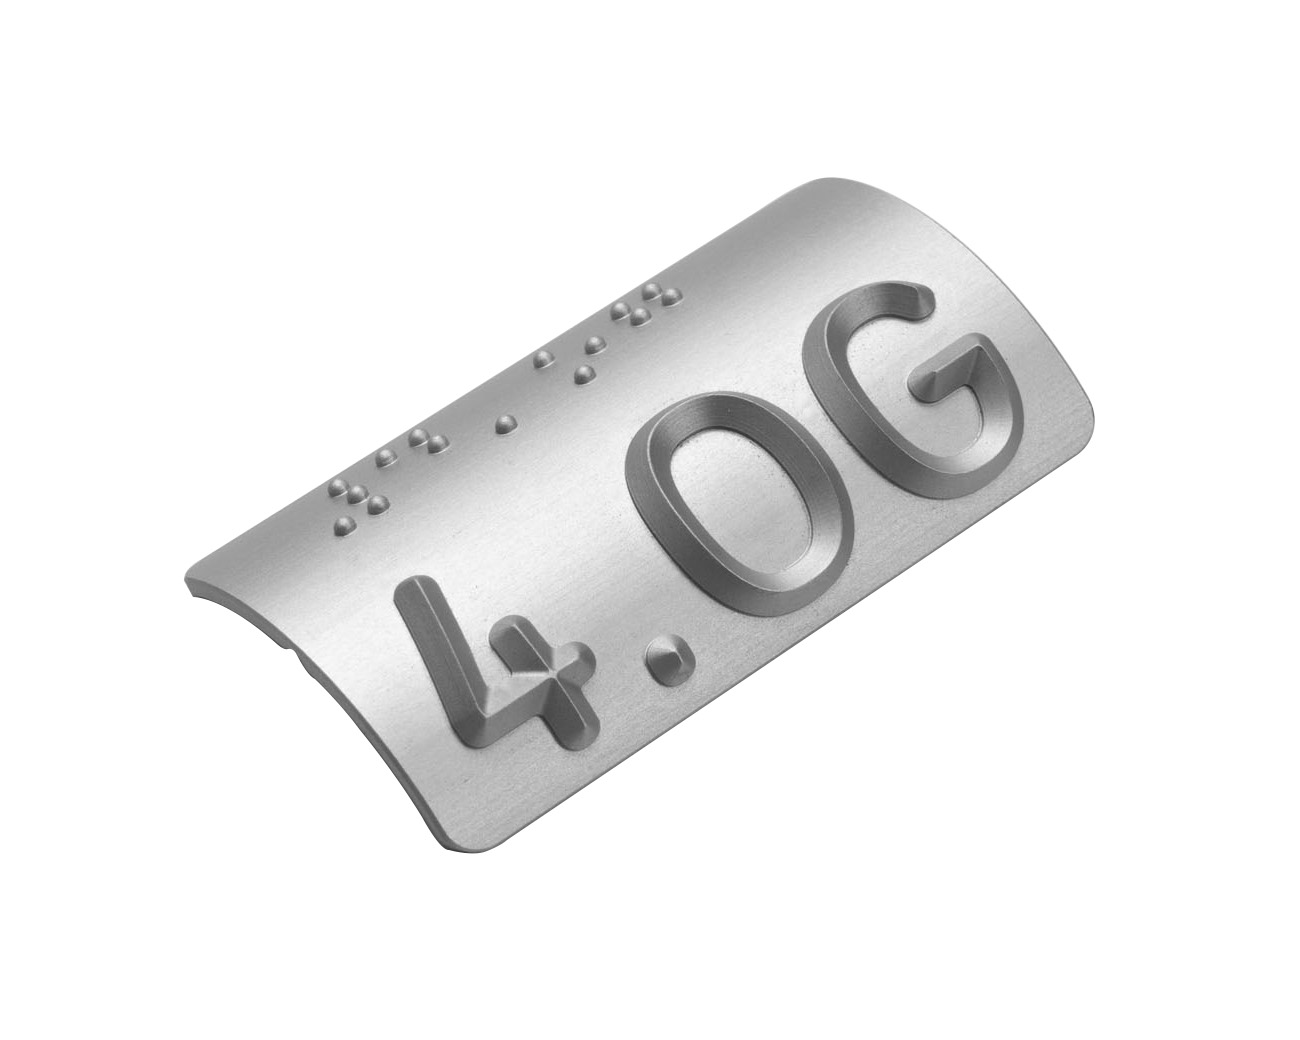 Handlaufschild rund Ø 40mm Aluminium silber eloxiert gefräst nach DIN32986